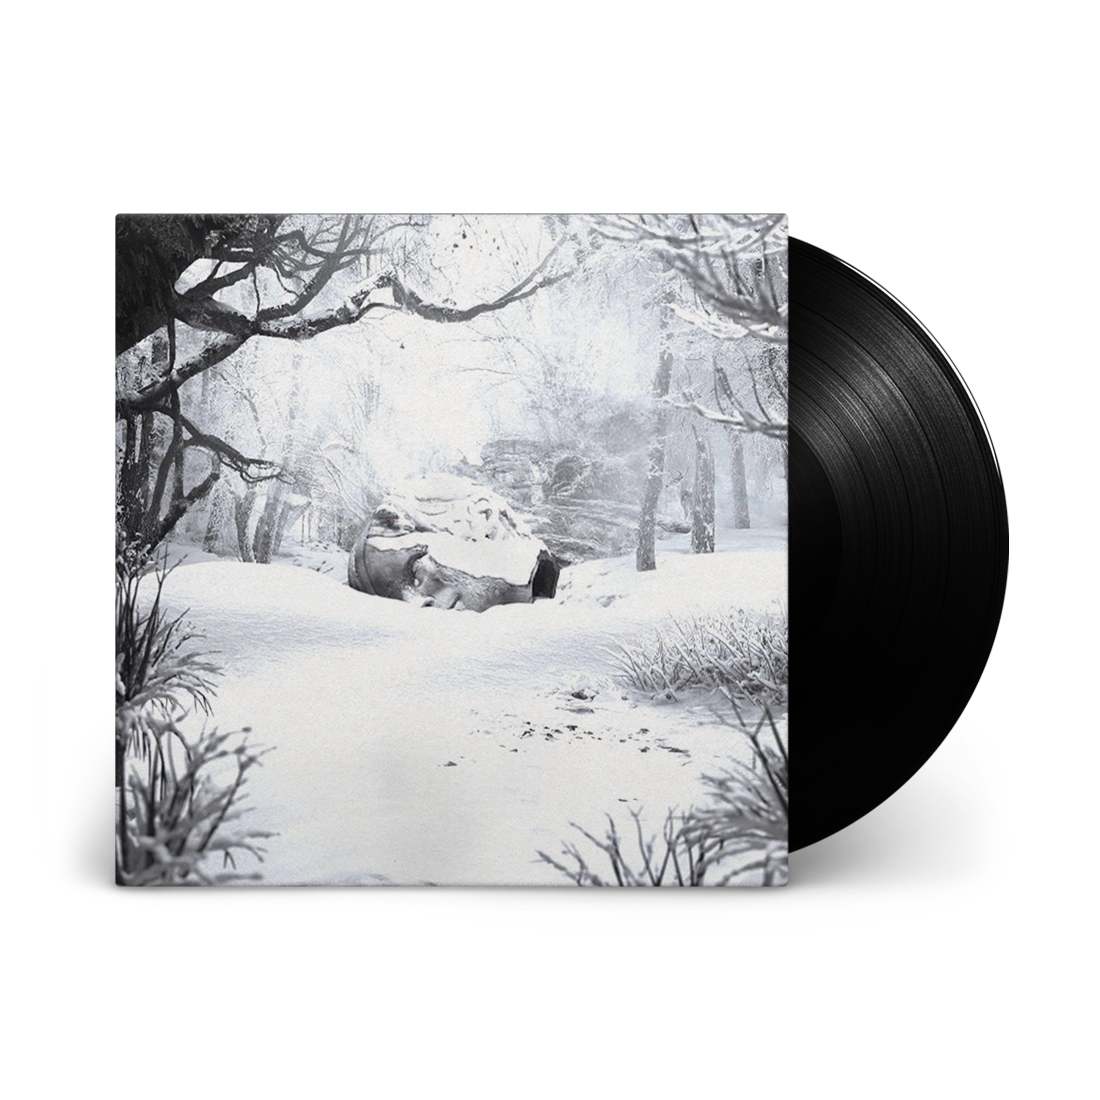 Weezer - SZNZ: Winter: Vinyl LP